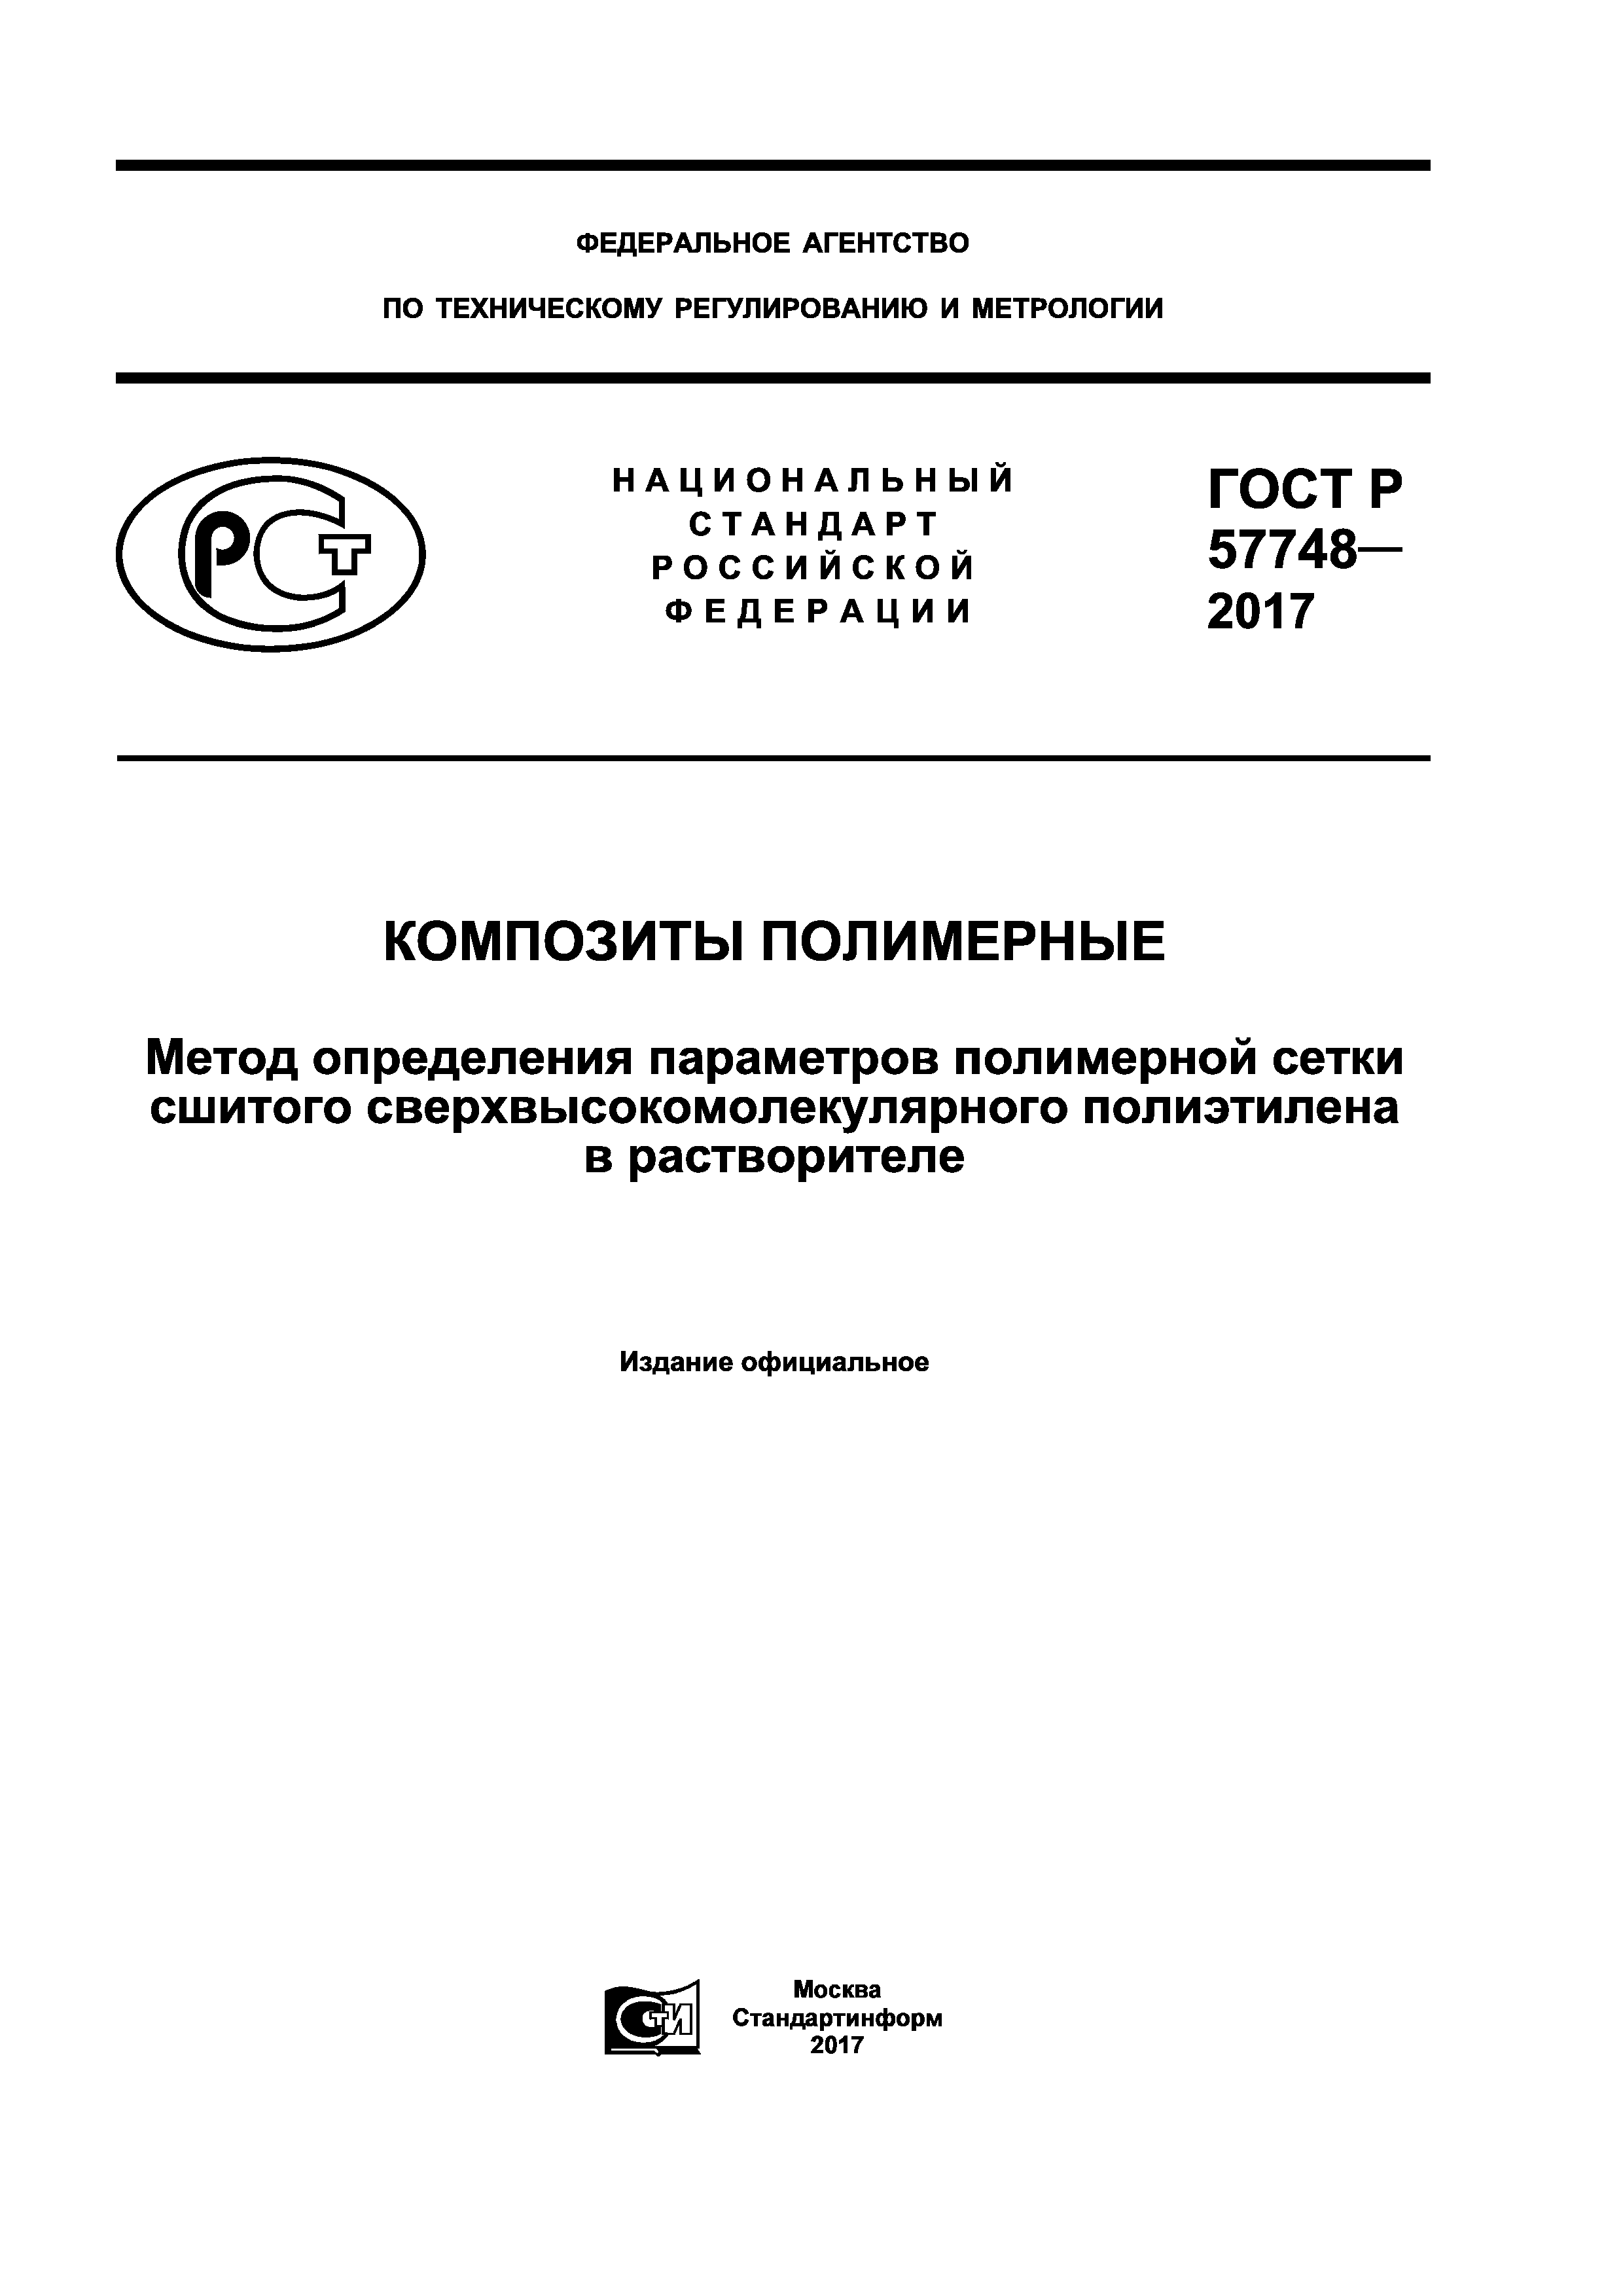 ГОСТ Р 57748-2017